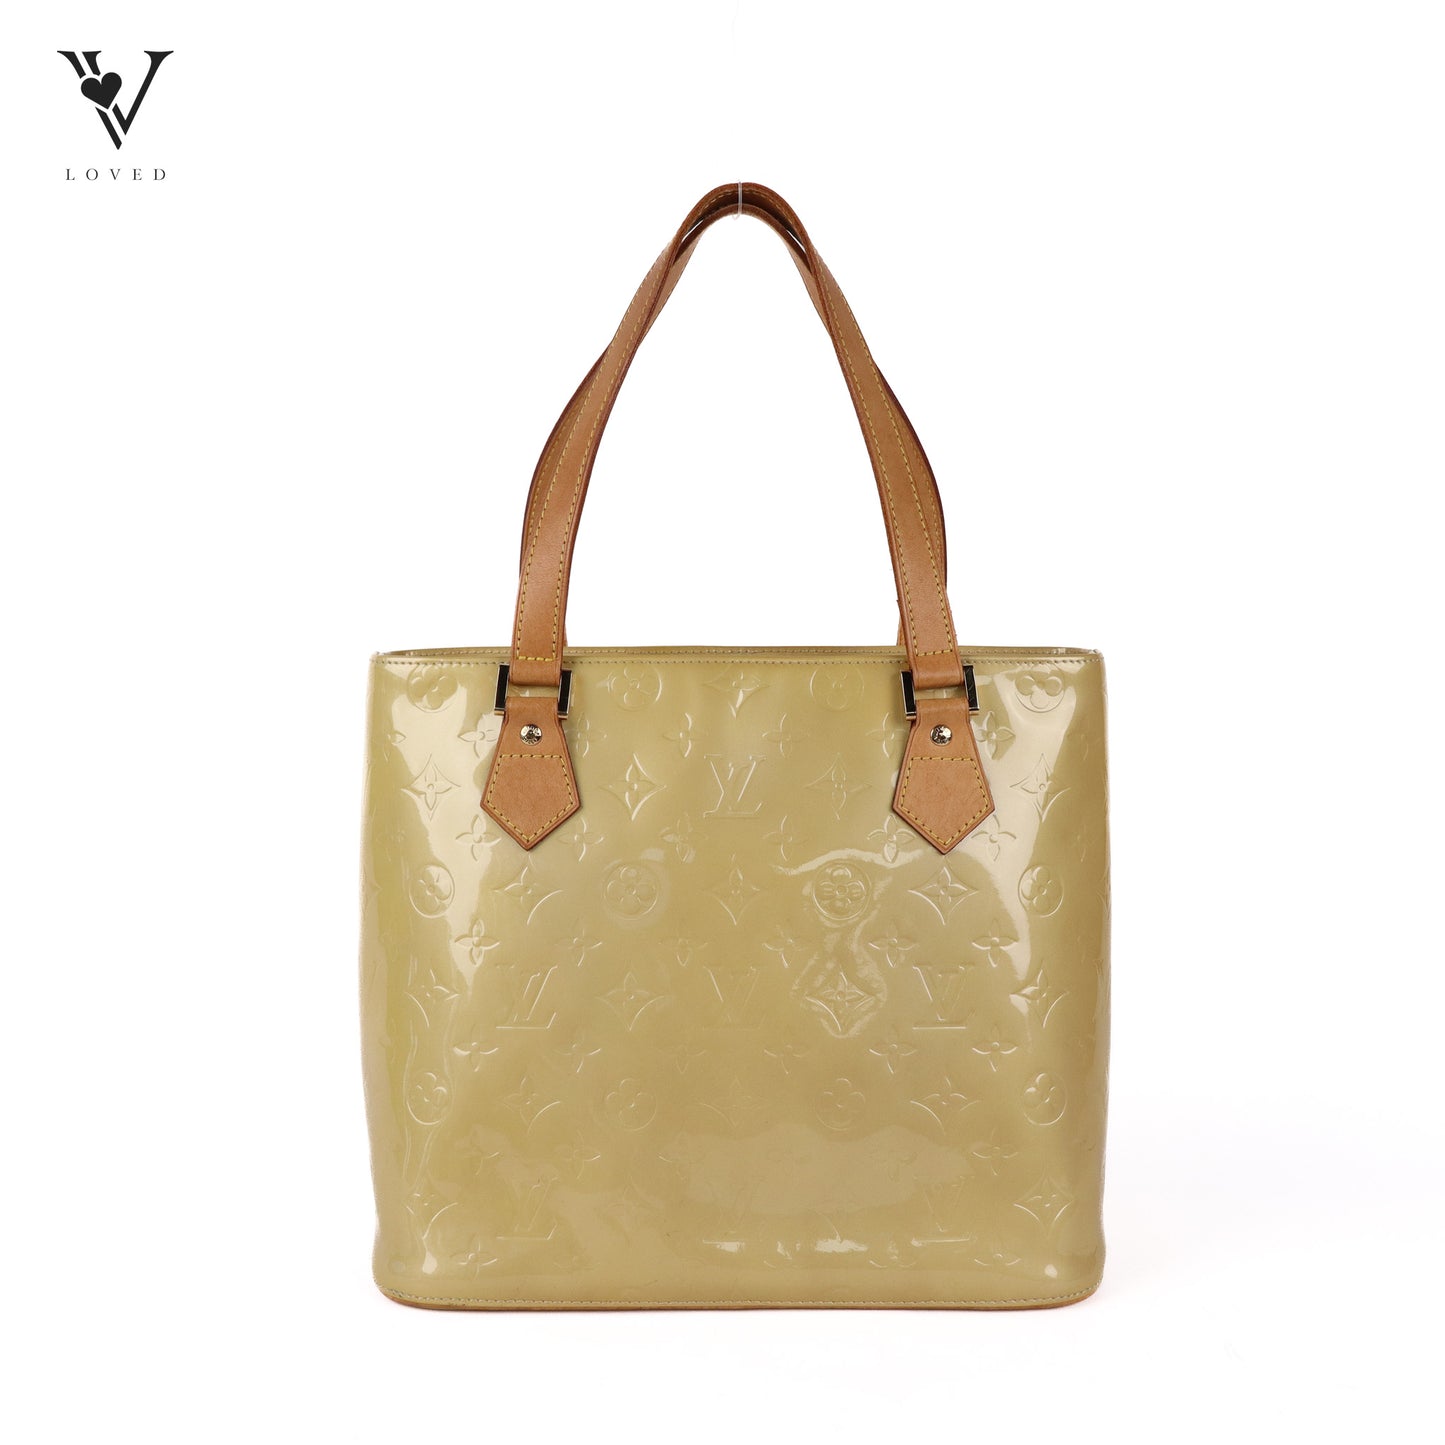 Houston handbag in Citrine Vernis Leather